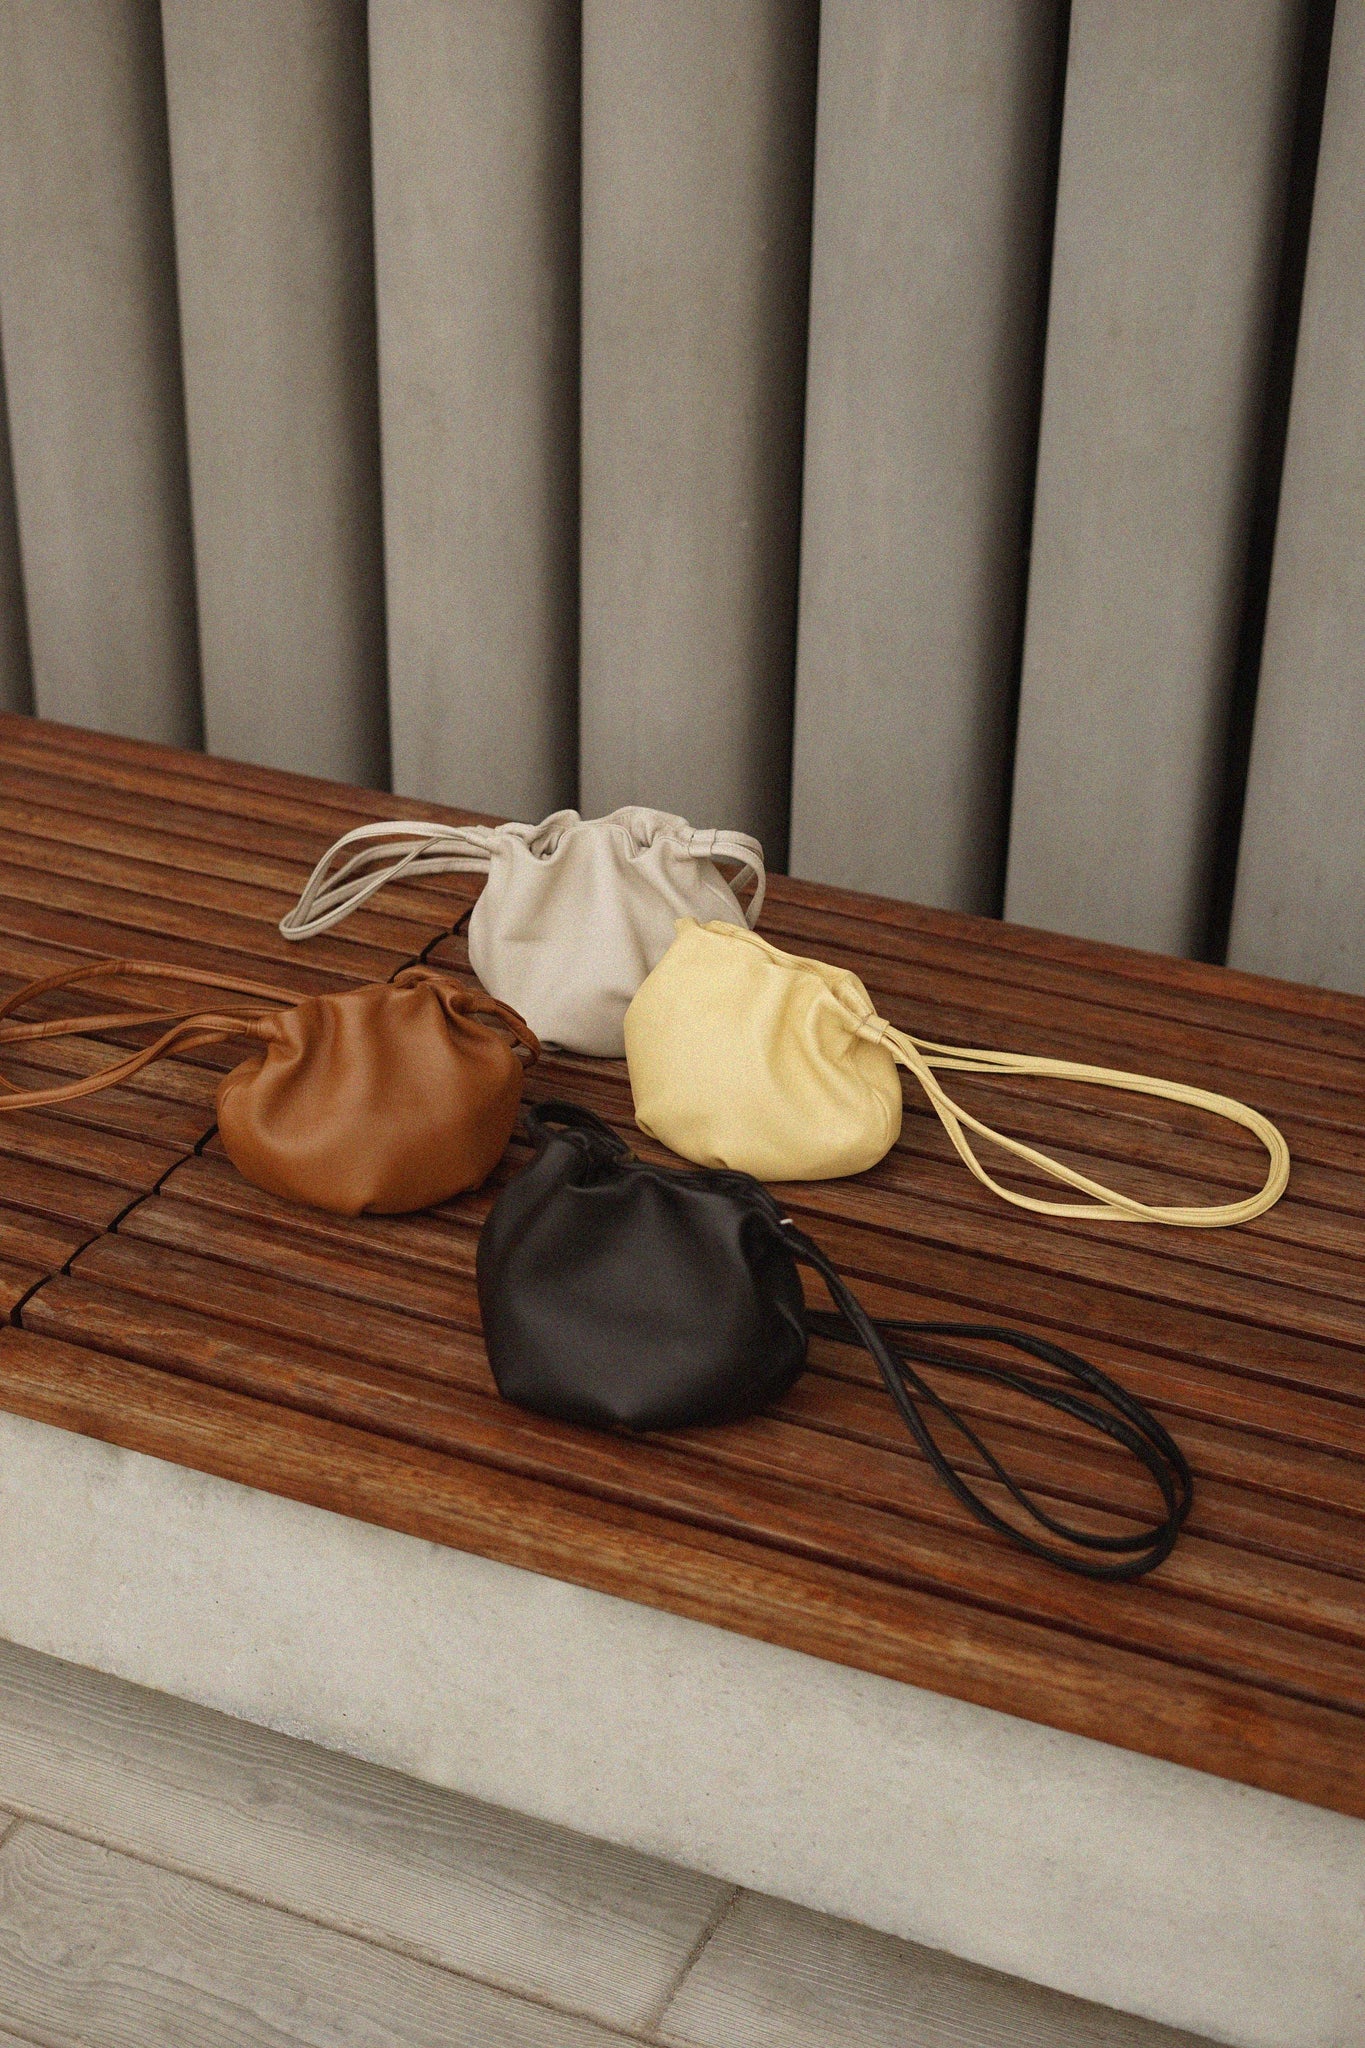 Mini Lantern Soft Leather Bag